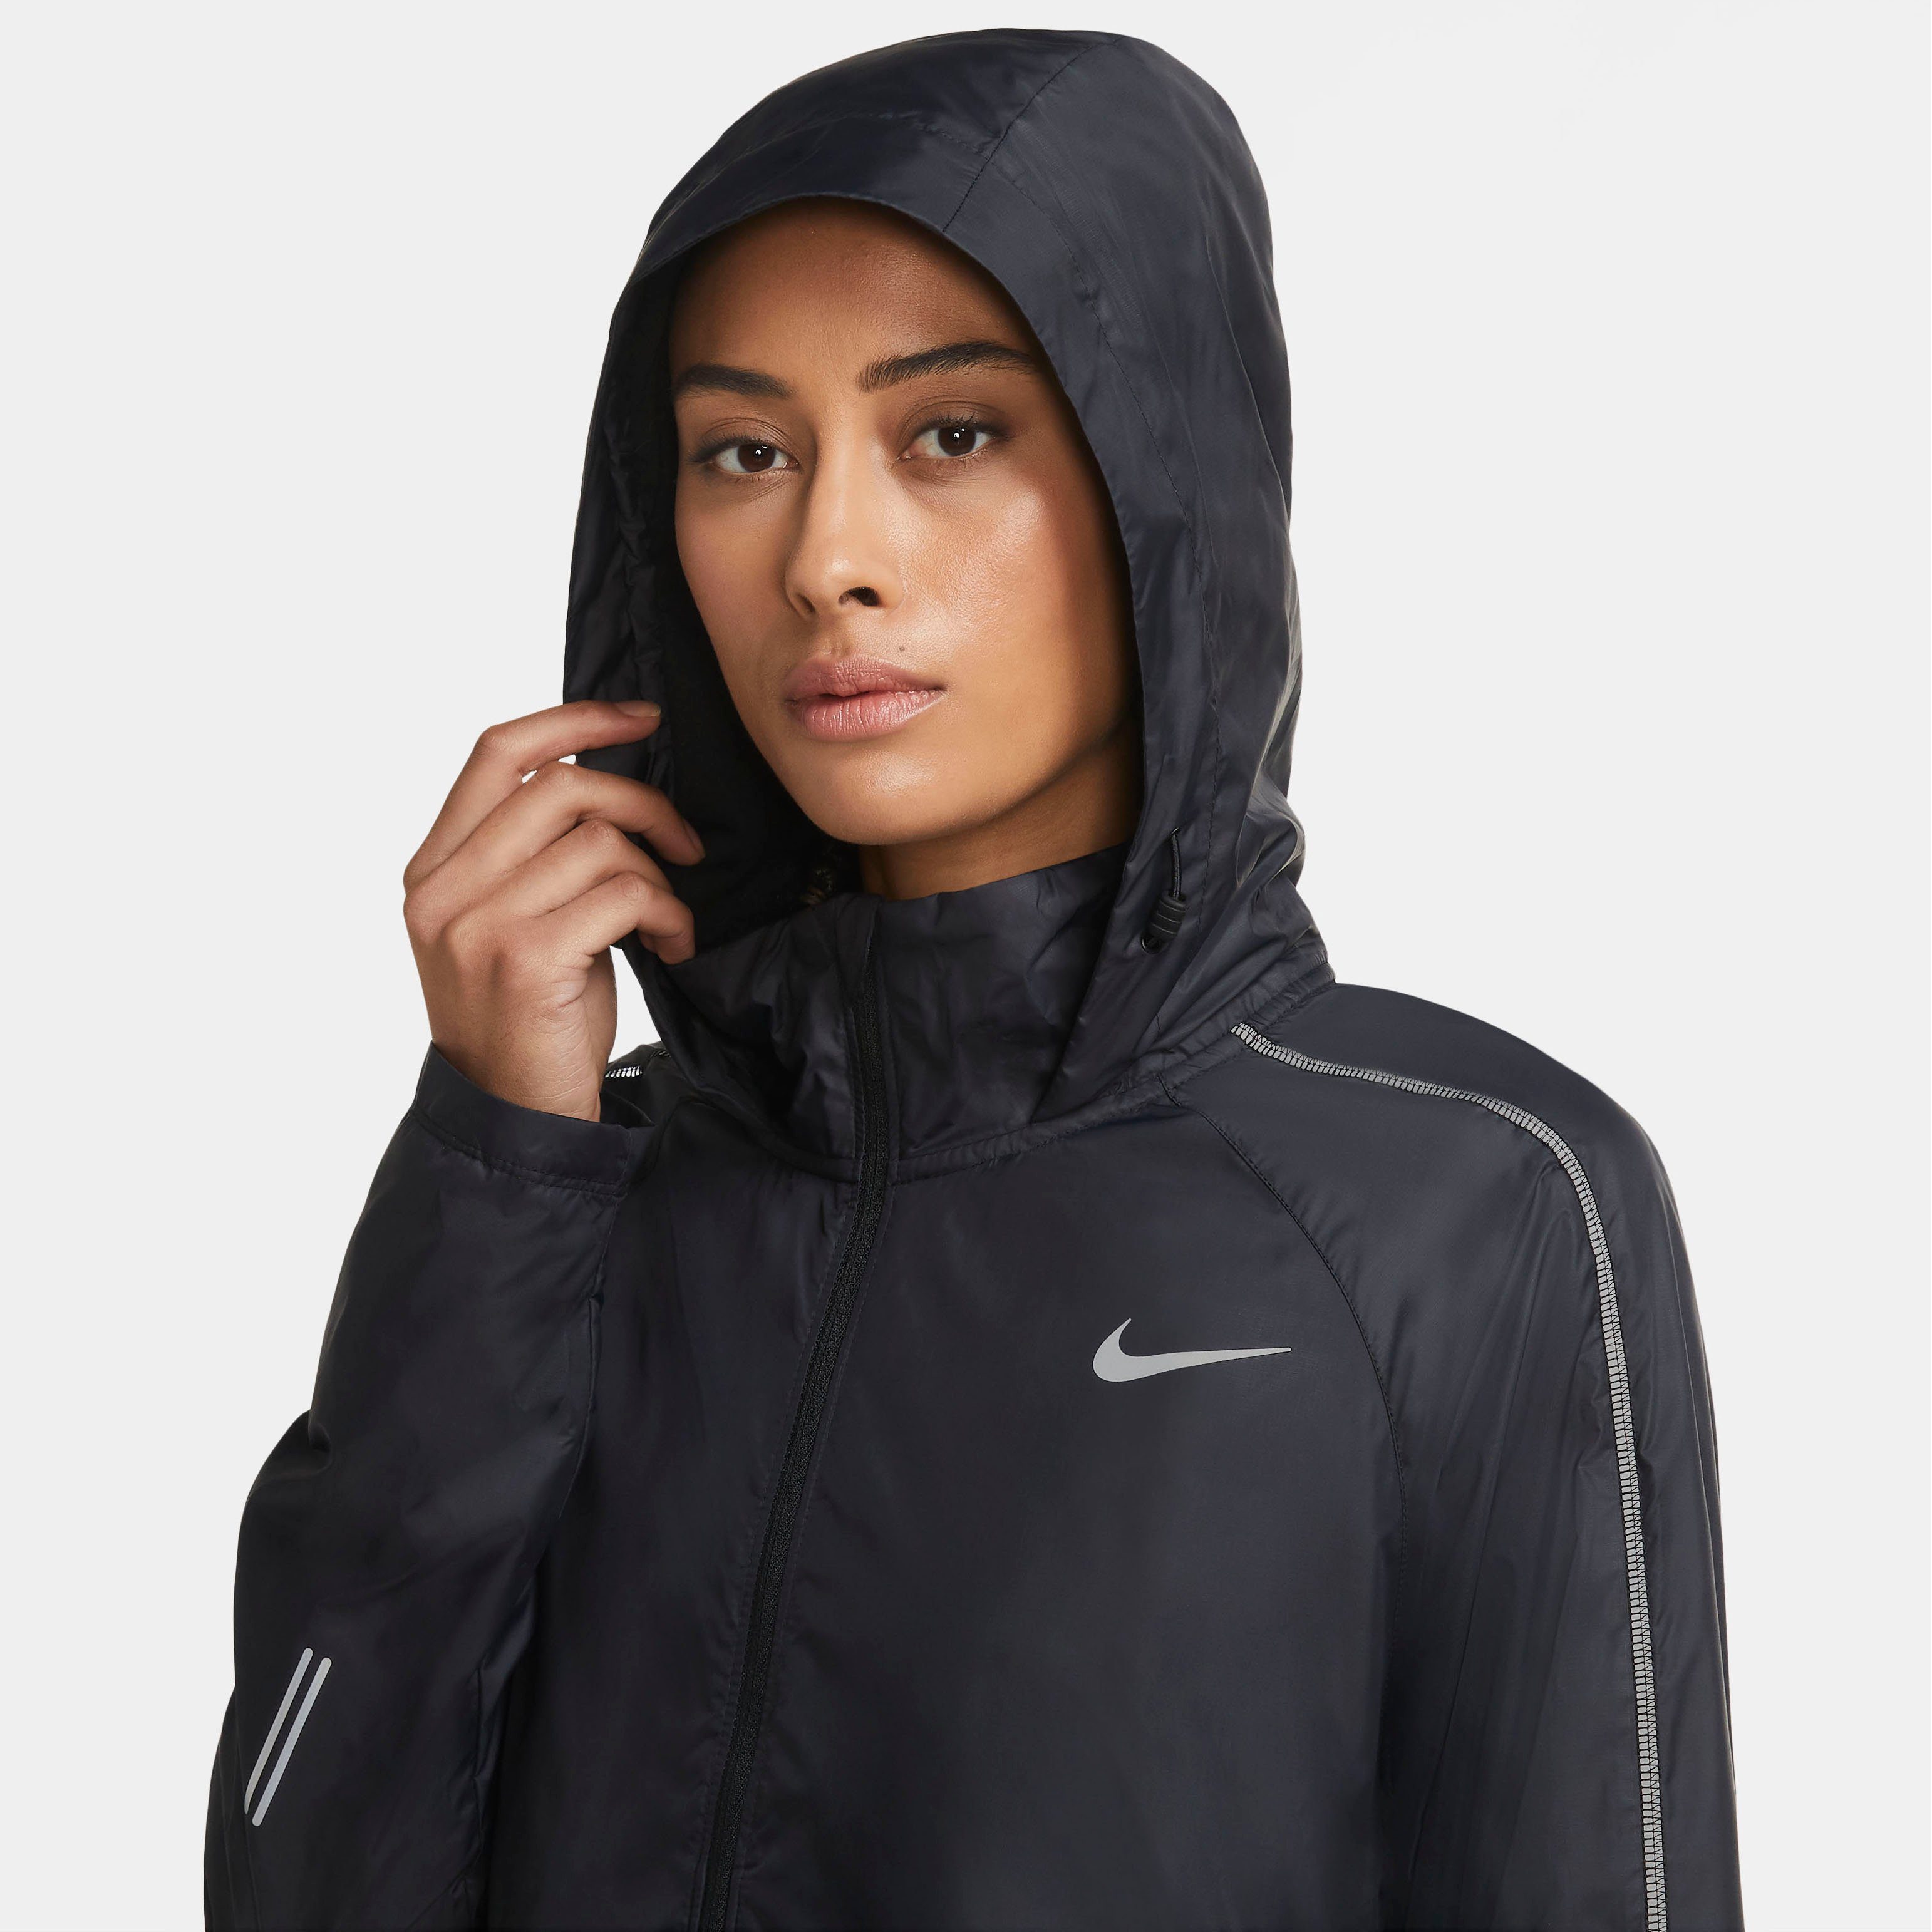 Nike Jacke online kaufen | OTTO